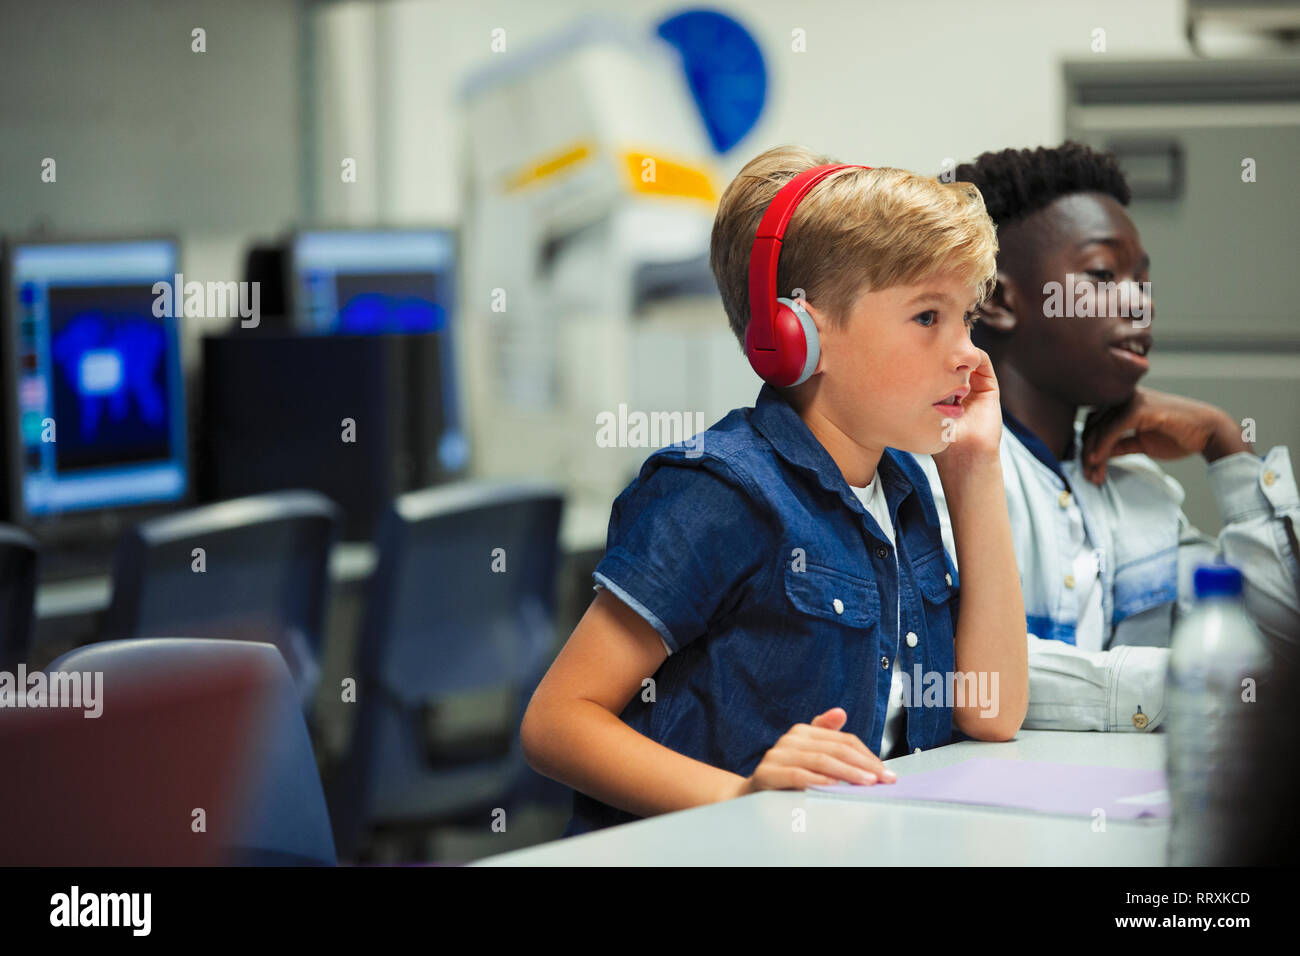 Focused junior high school boy with headphones in classroom Stock Photo